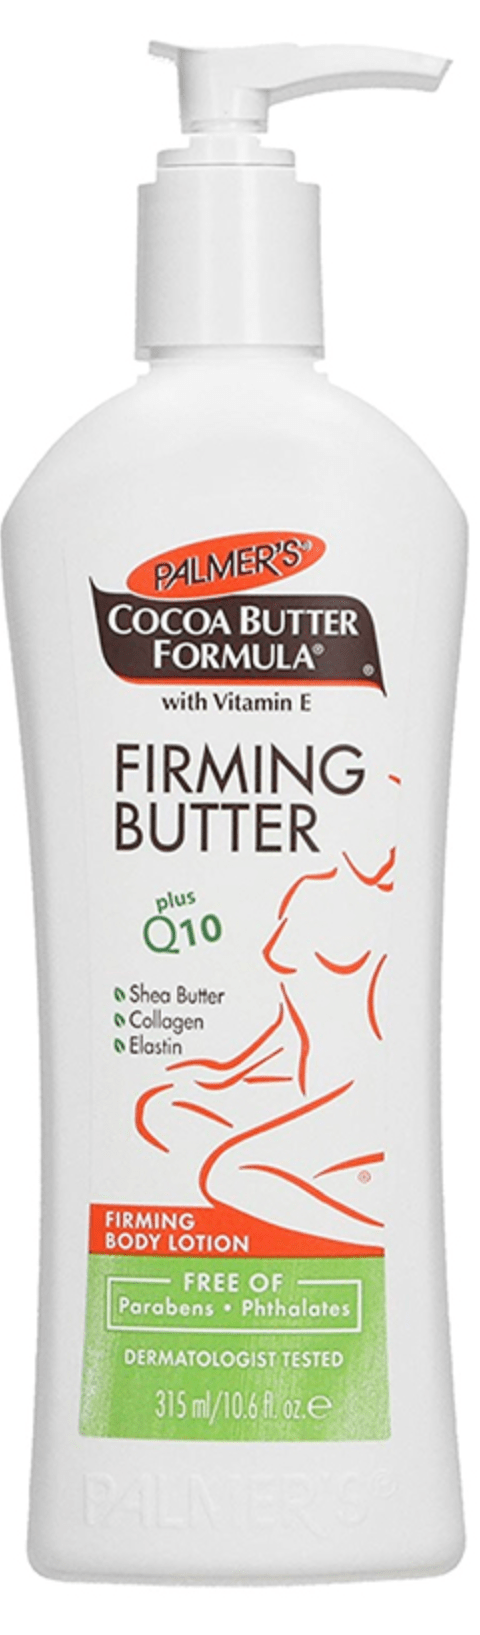 Palmer's - Cocoa Butter Formula - Lait Raffermissant "Firming butter" - 315ml - Palmer's - Ethni Beauty Market